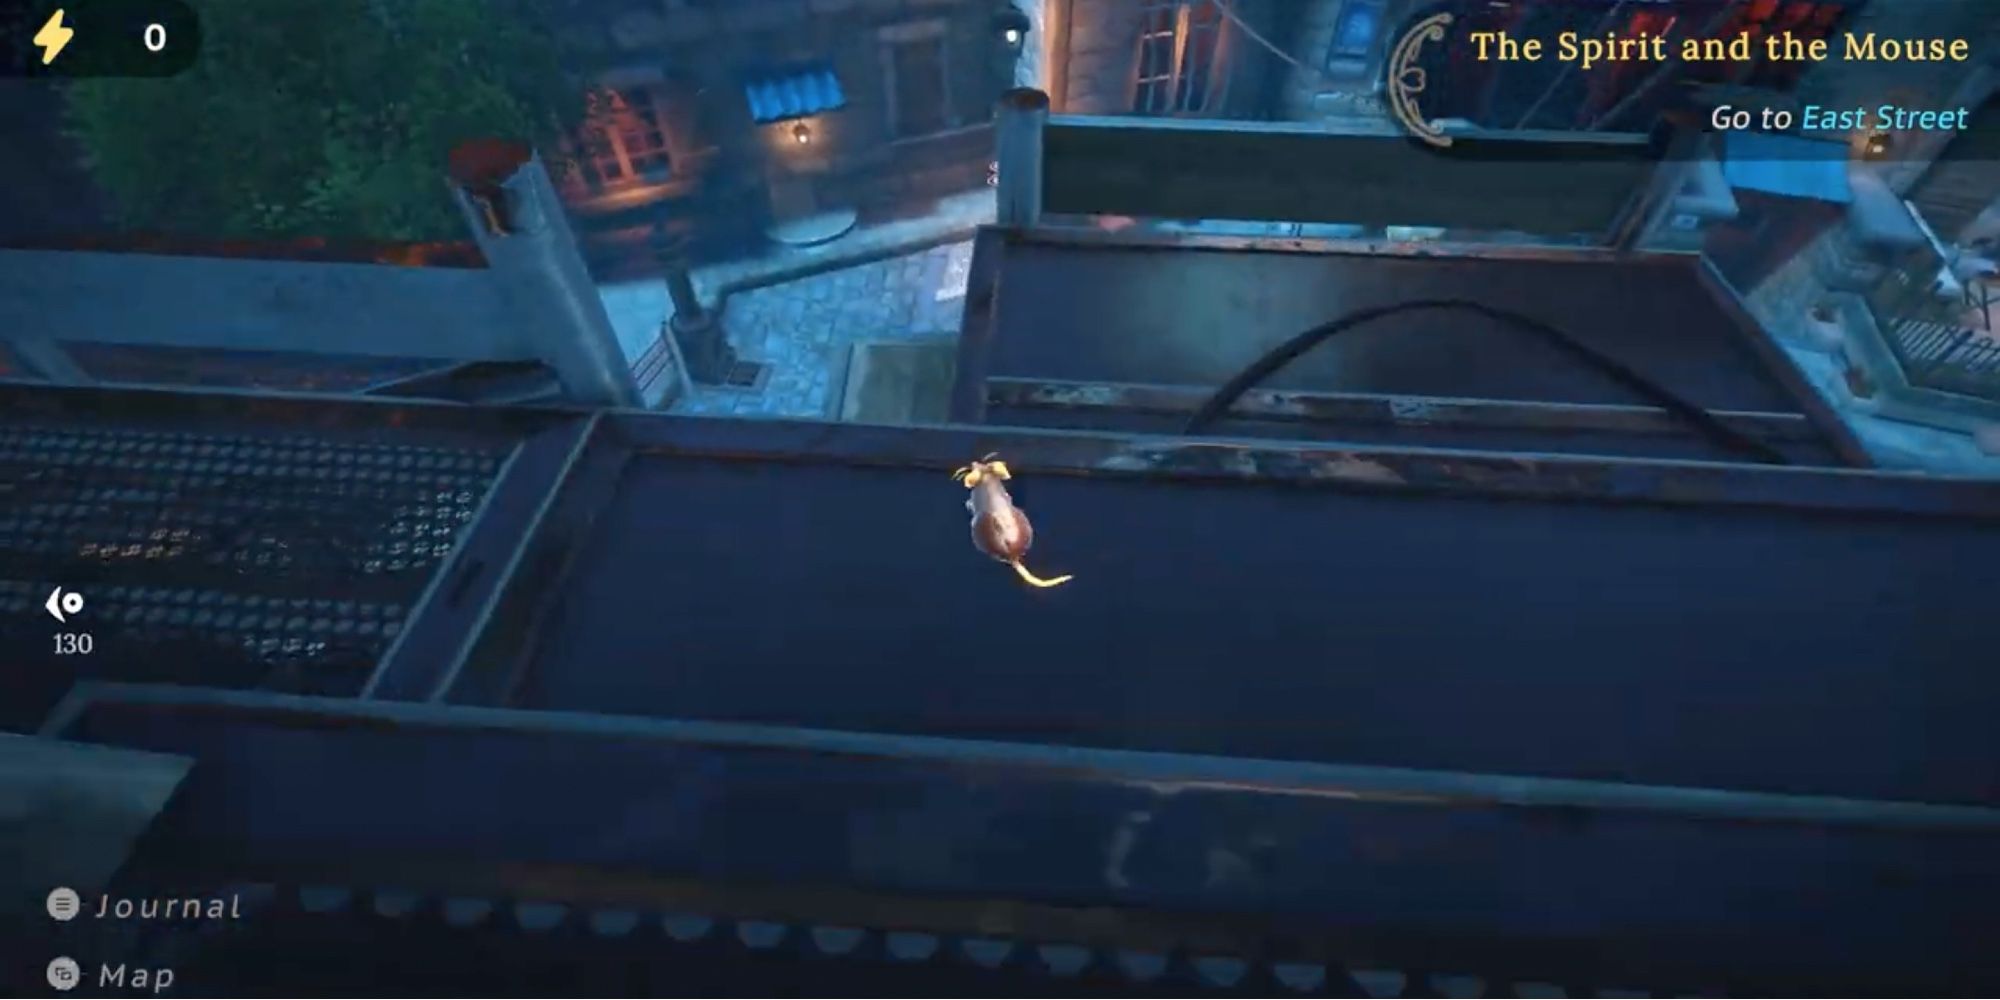 Player jumps onto a ledge